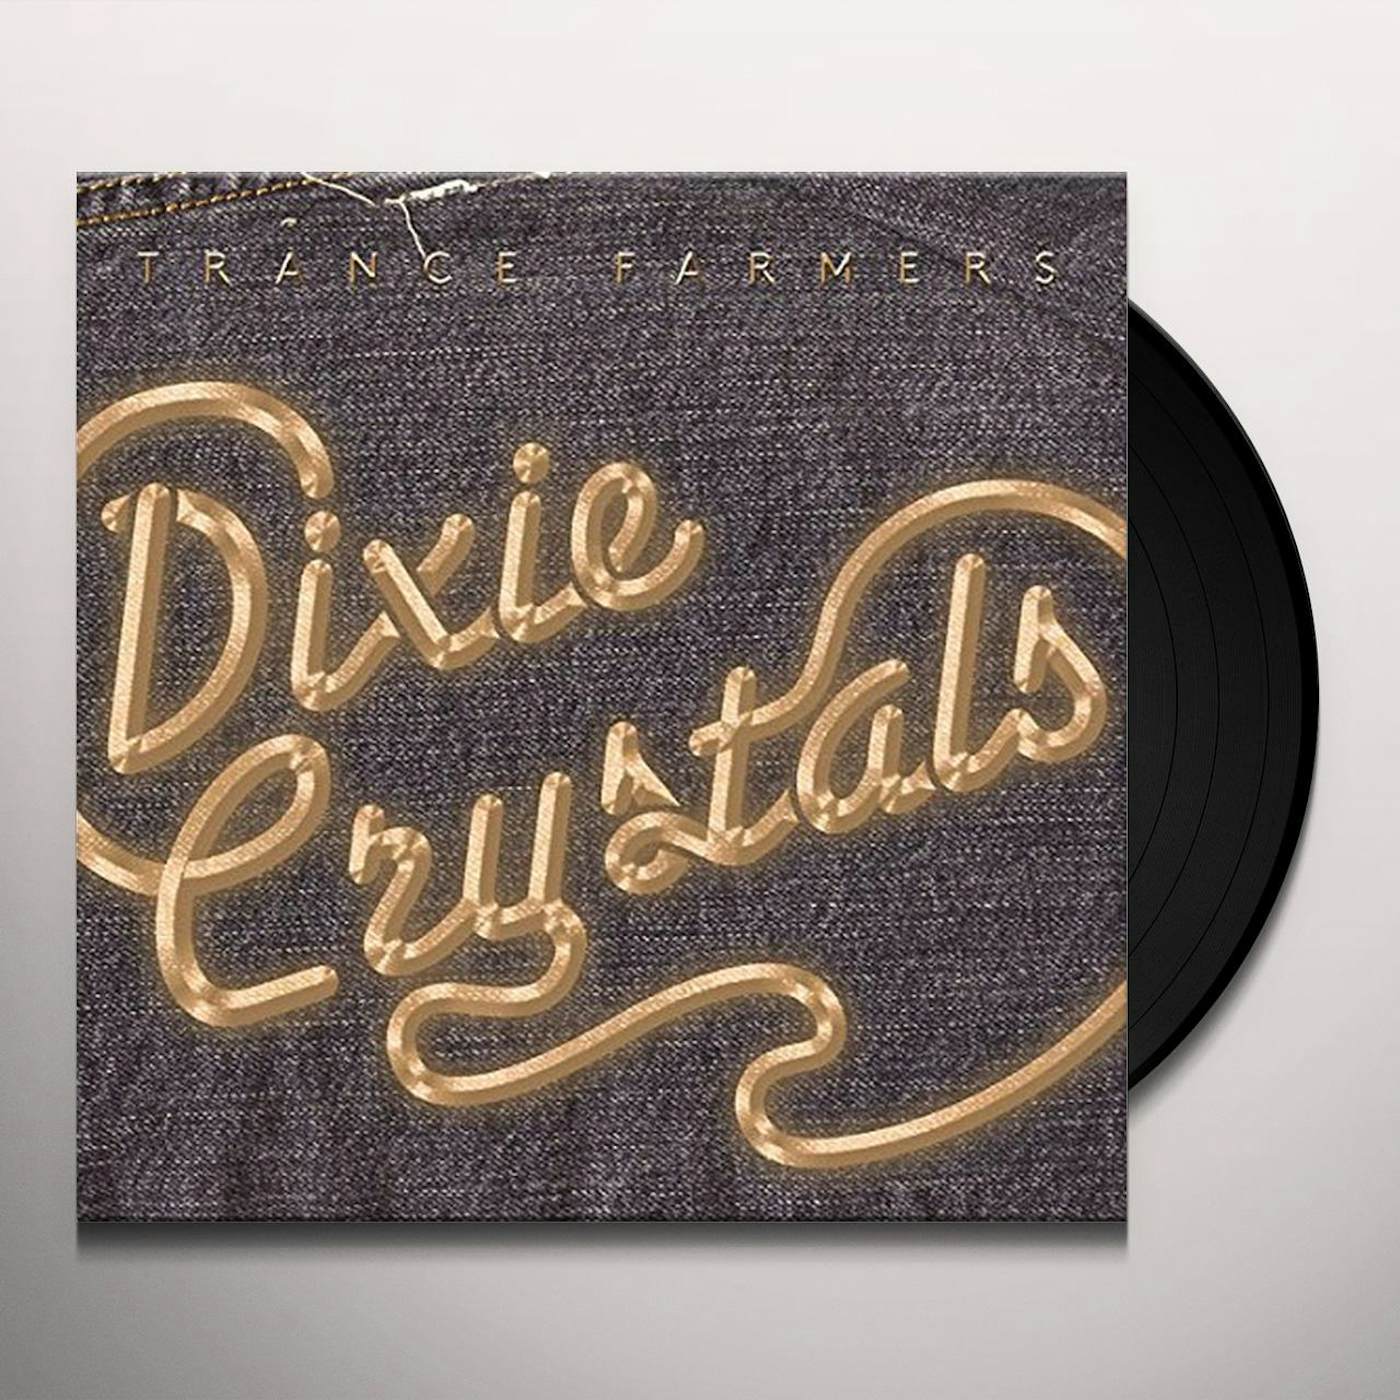 Trance Farmers Dixie Crystals Vinyl Record